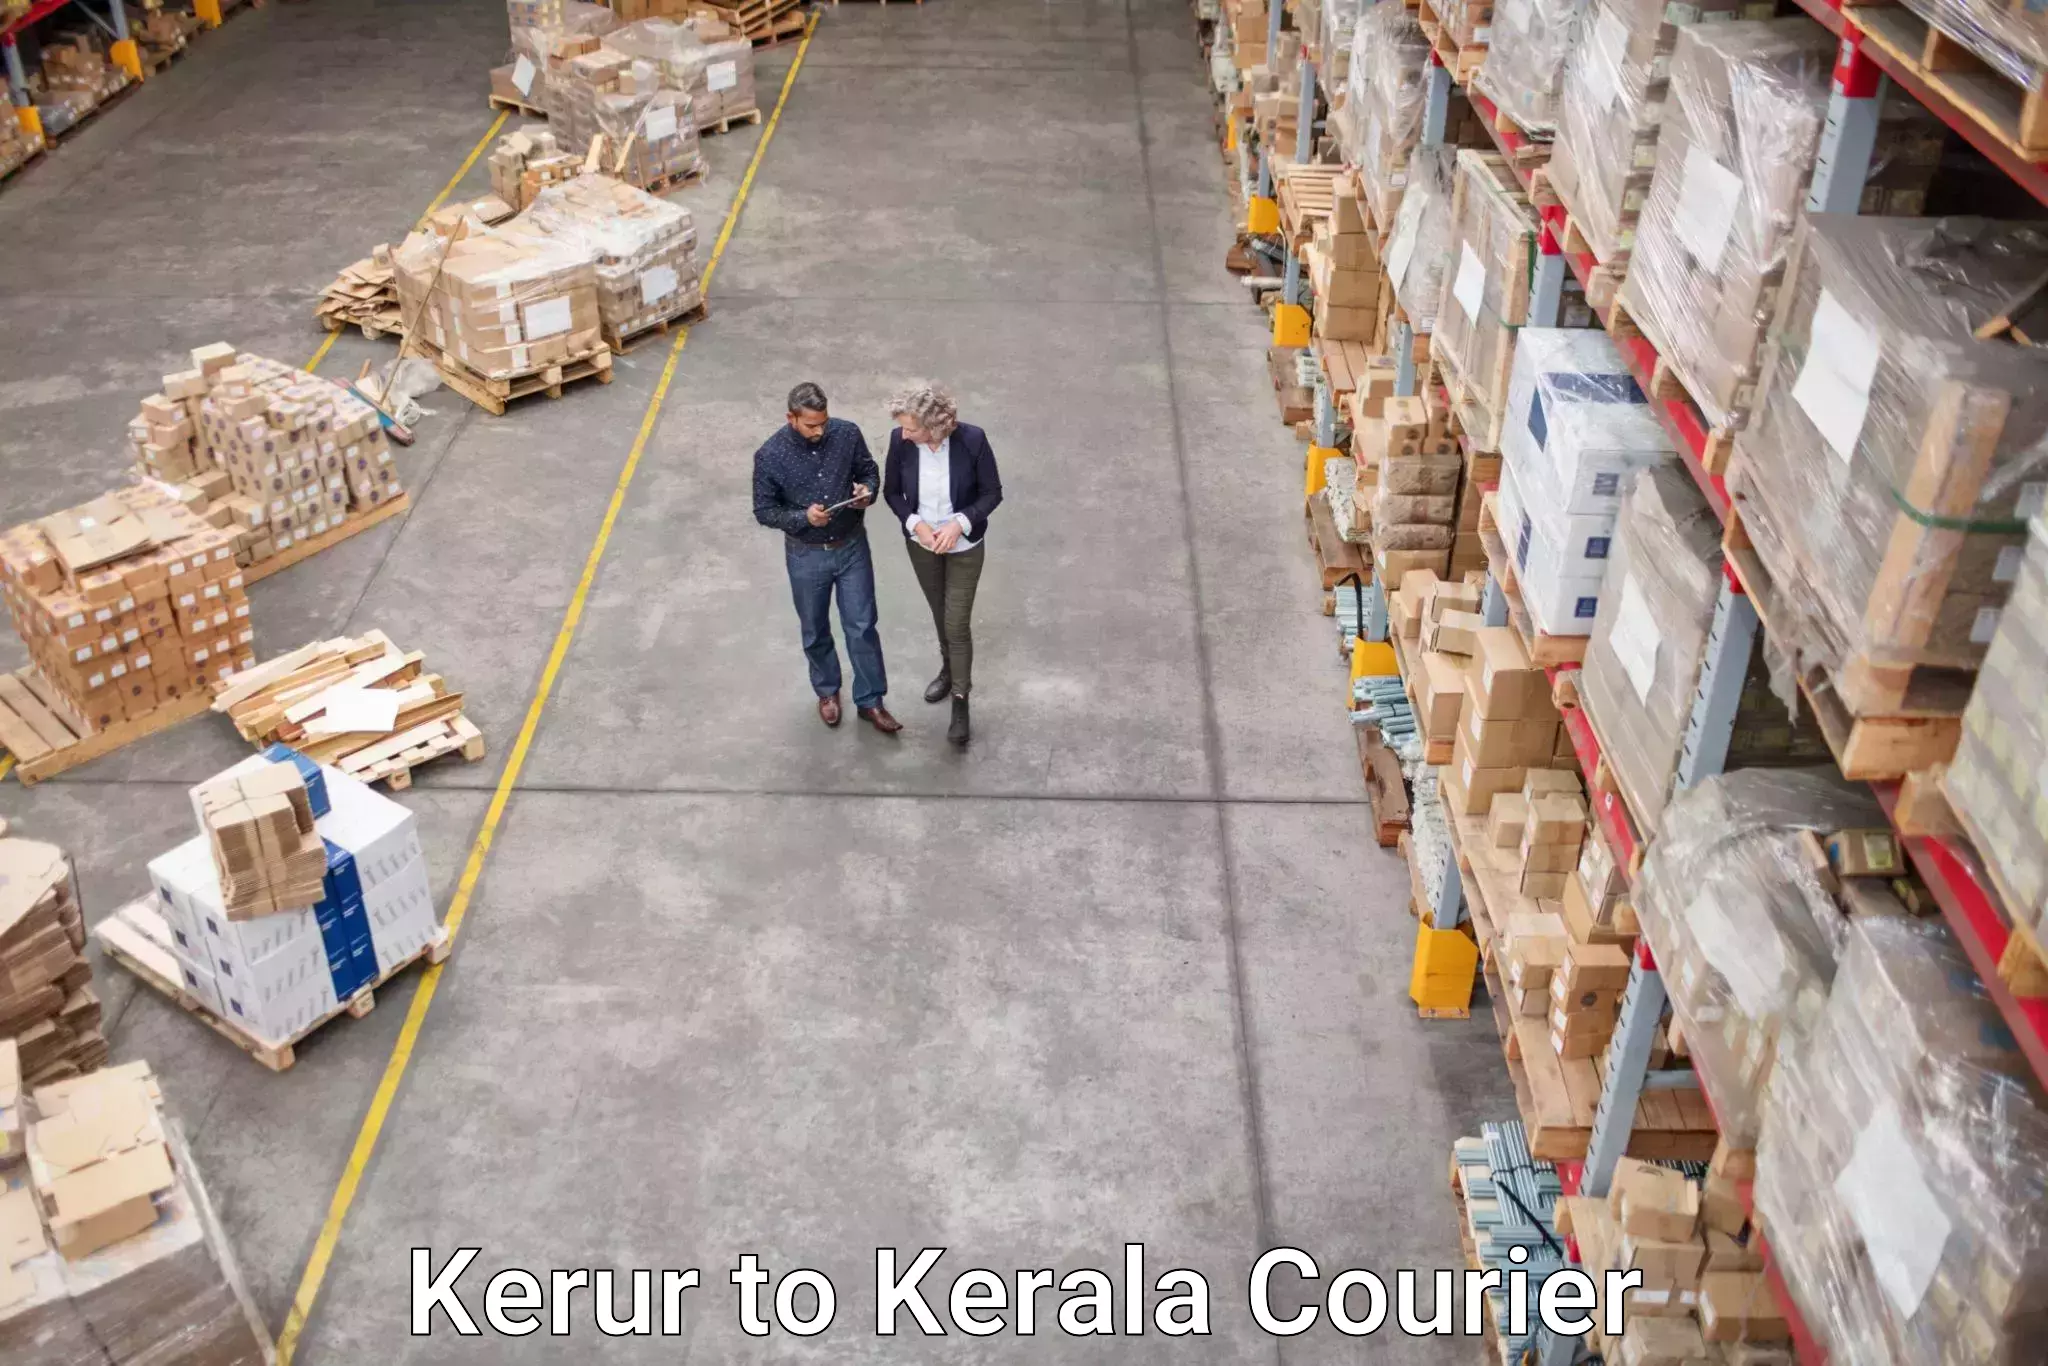 Efficient parcel tracking Kerur to Cochin Port Kochi